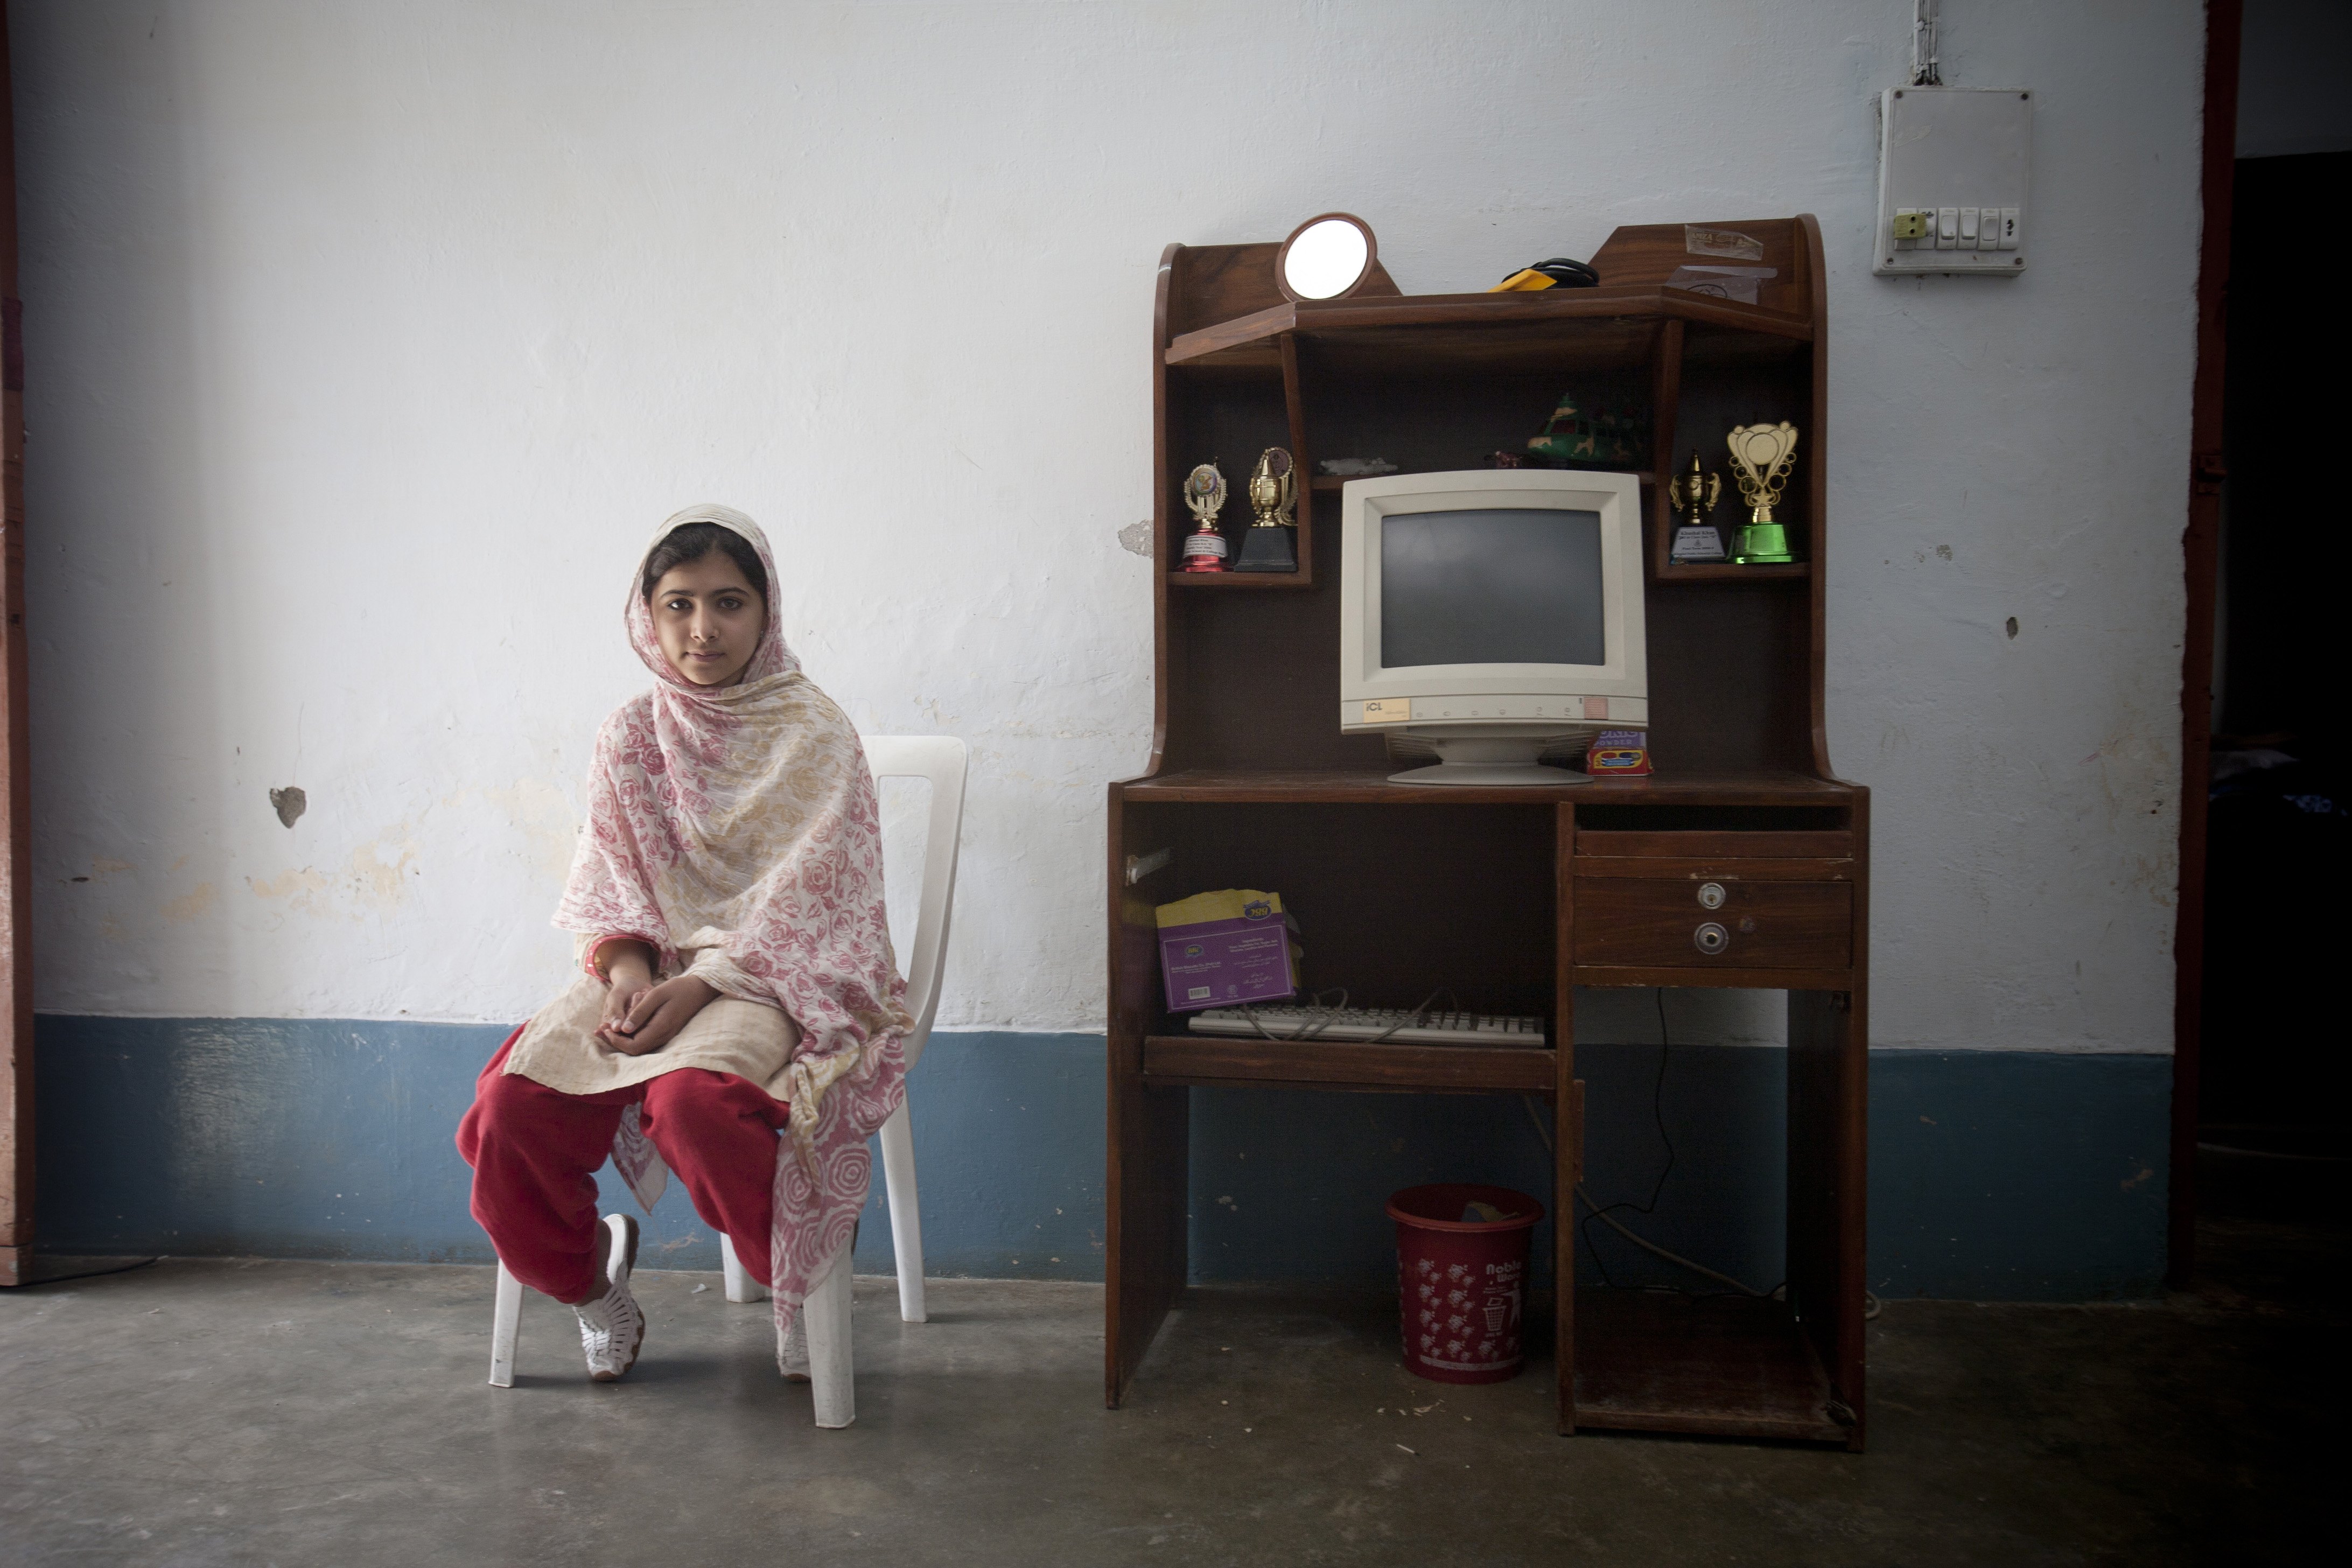 Malala Yousafzai via Getty Images